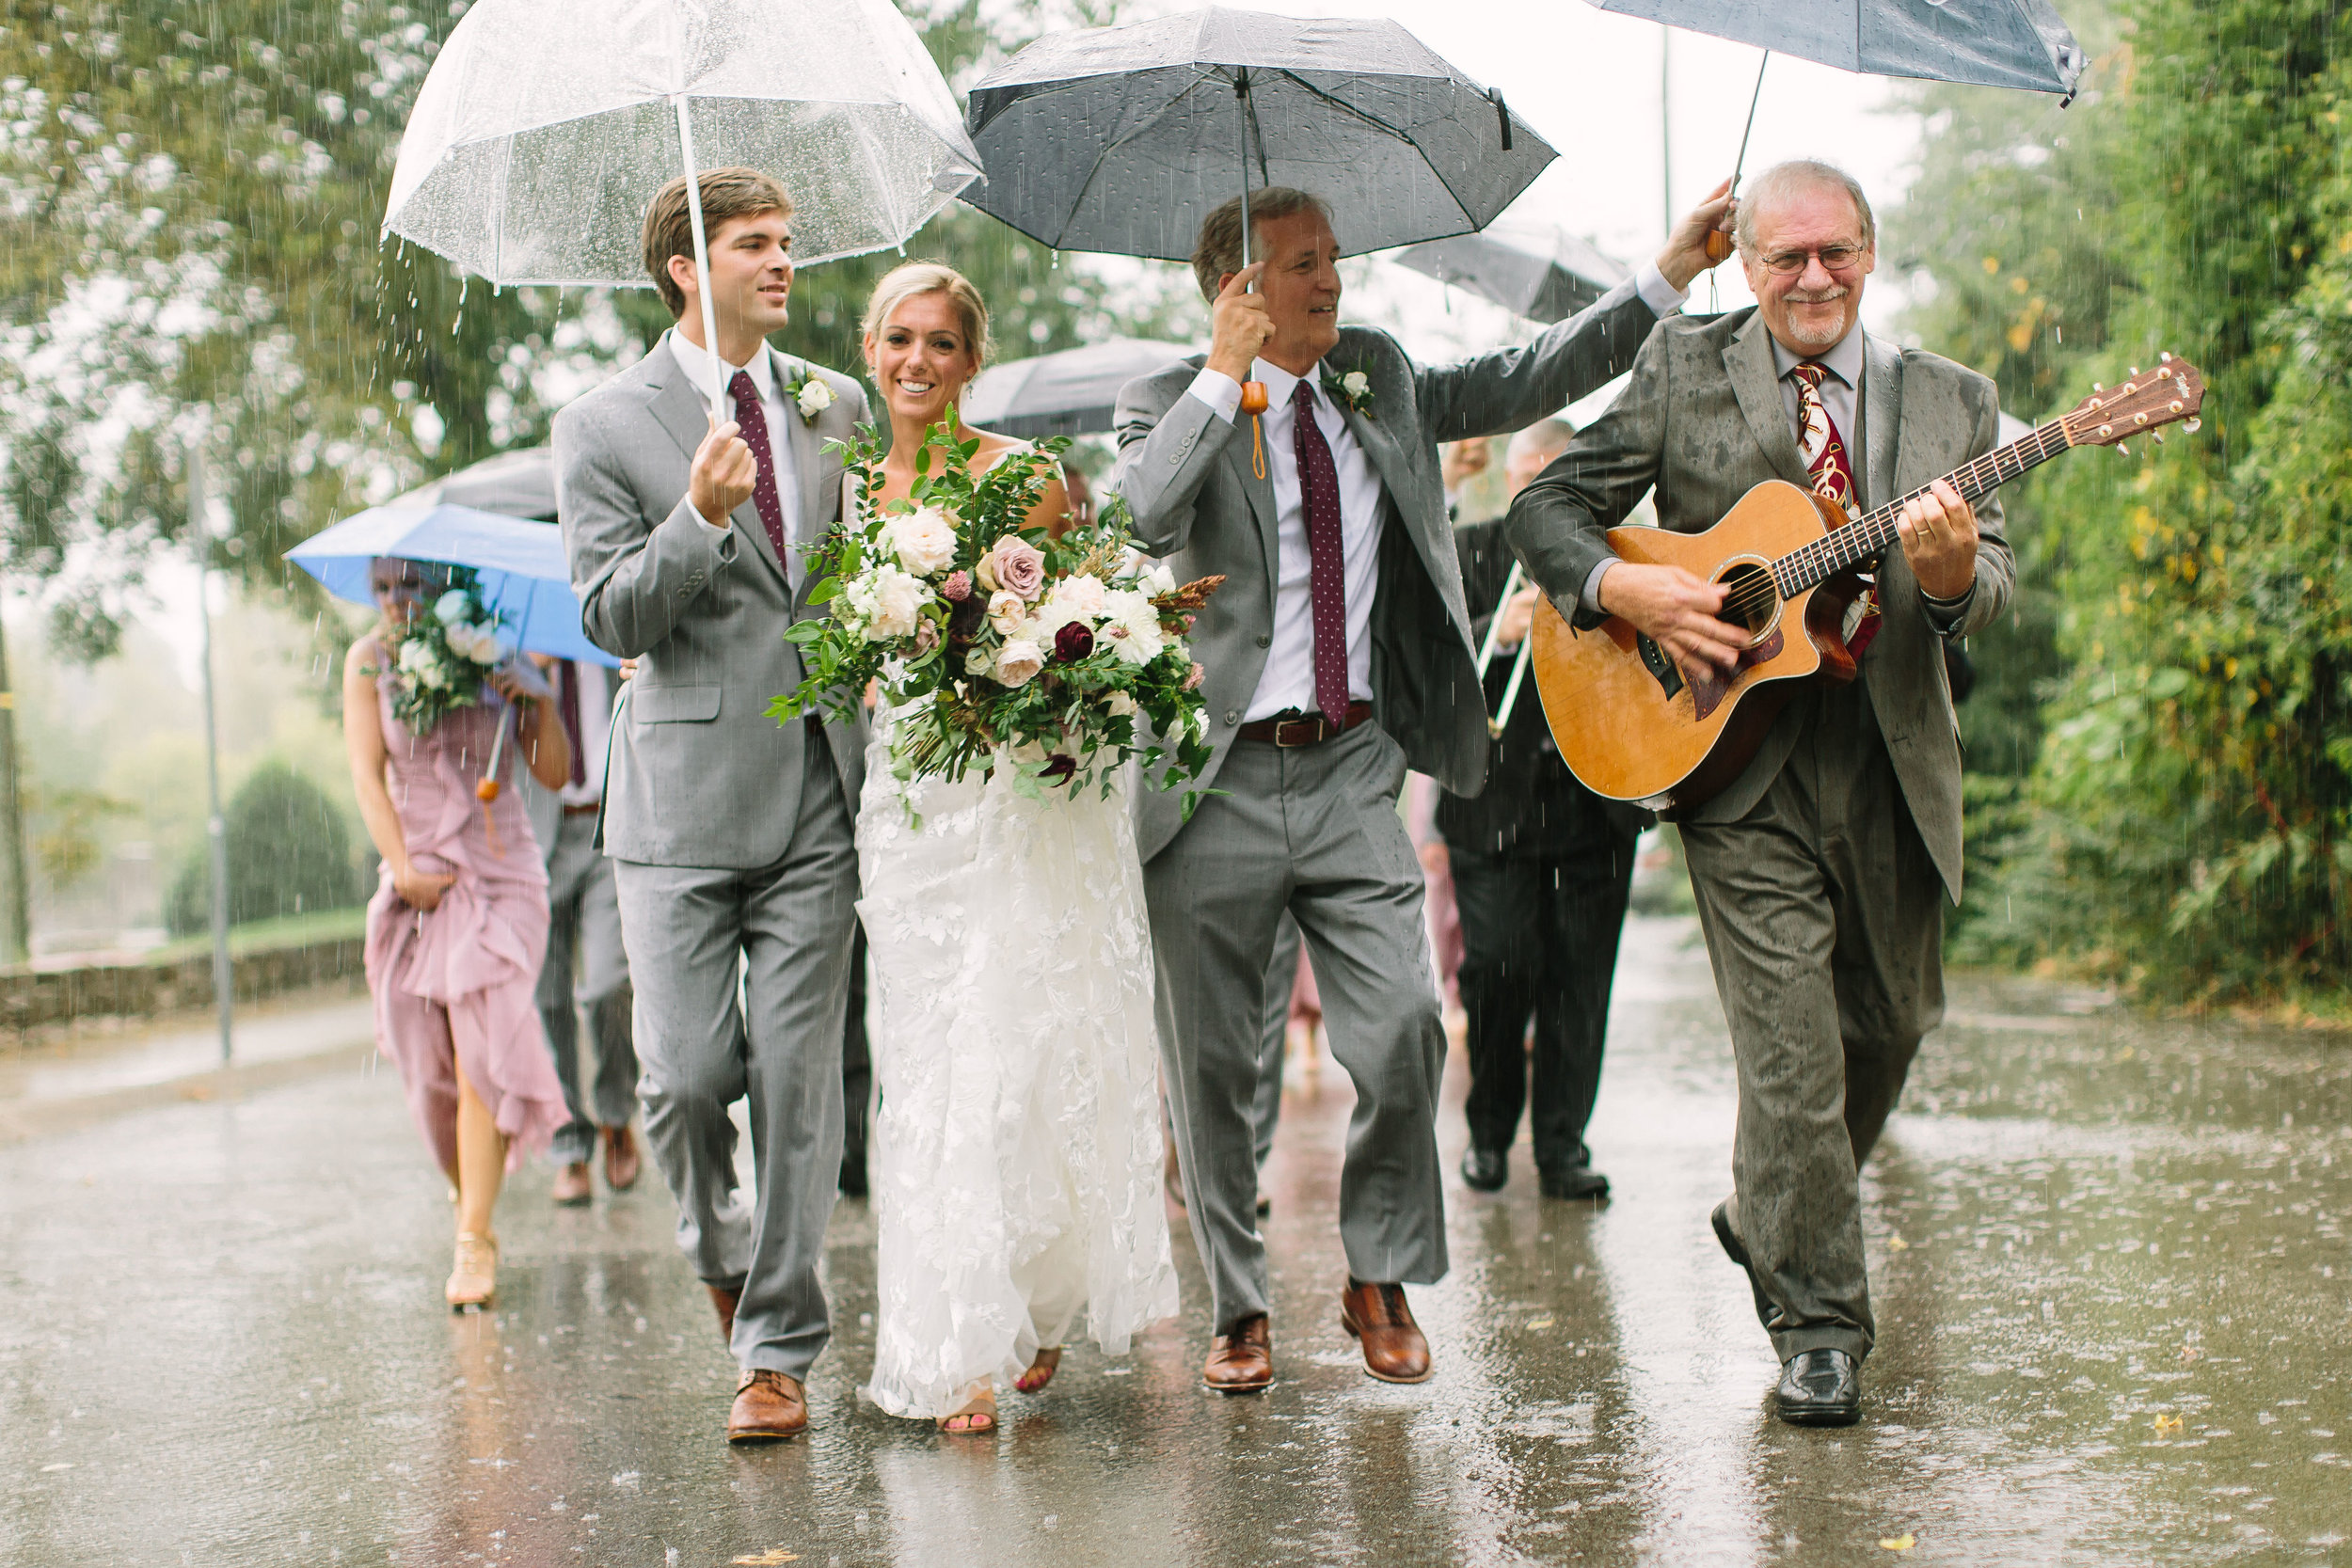 New Orleans style wedding parade in the rain // Nashville Wedding Florist